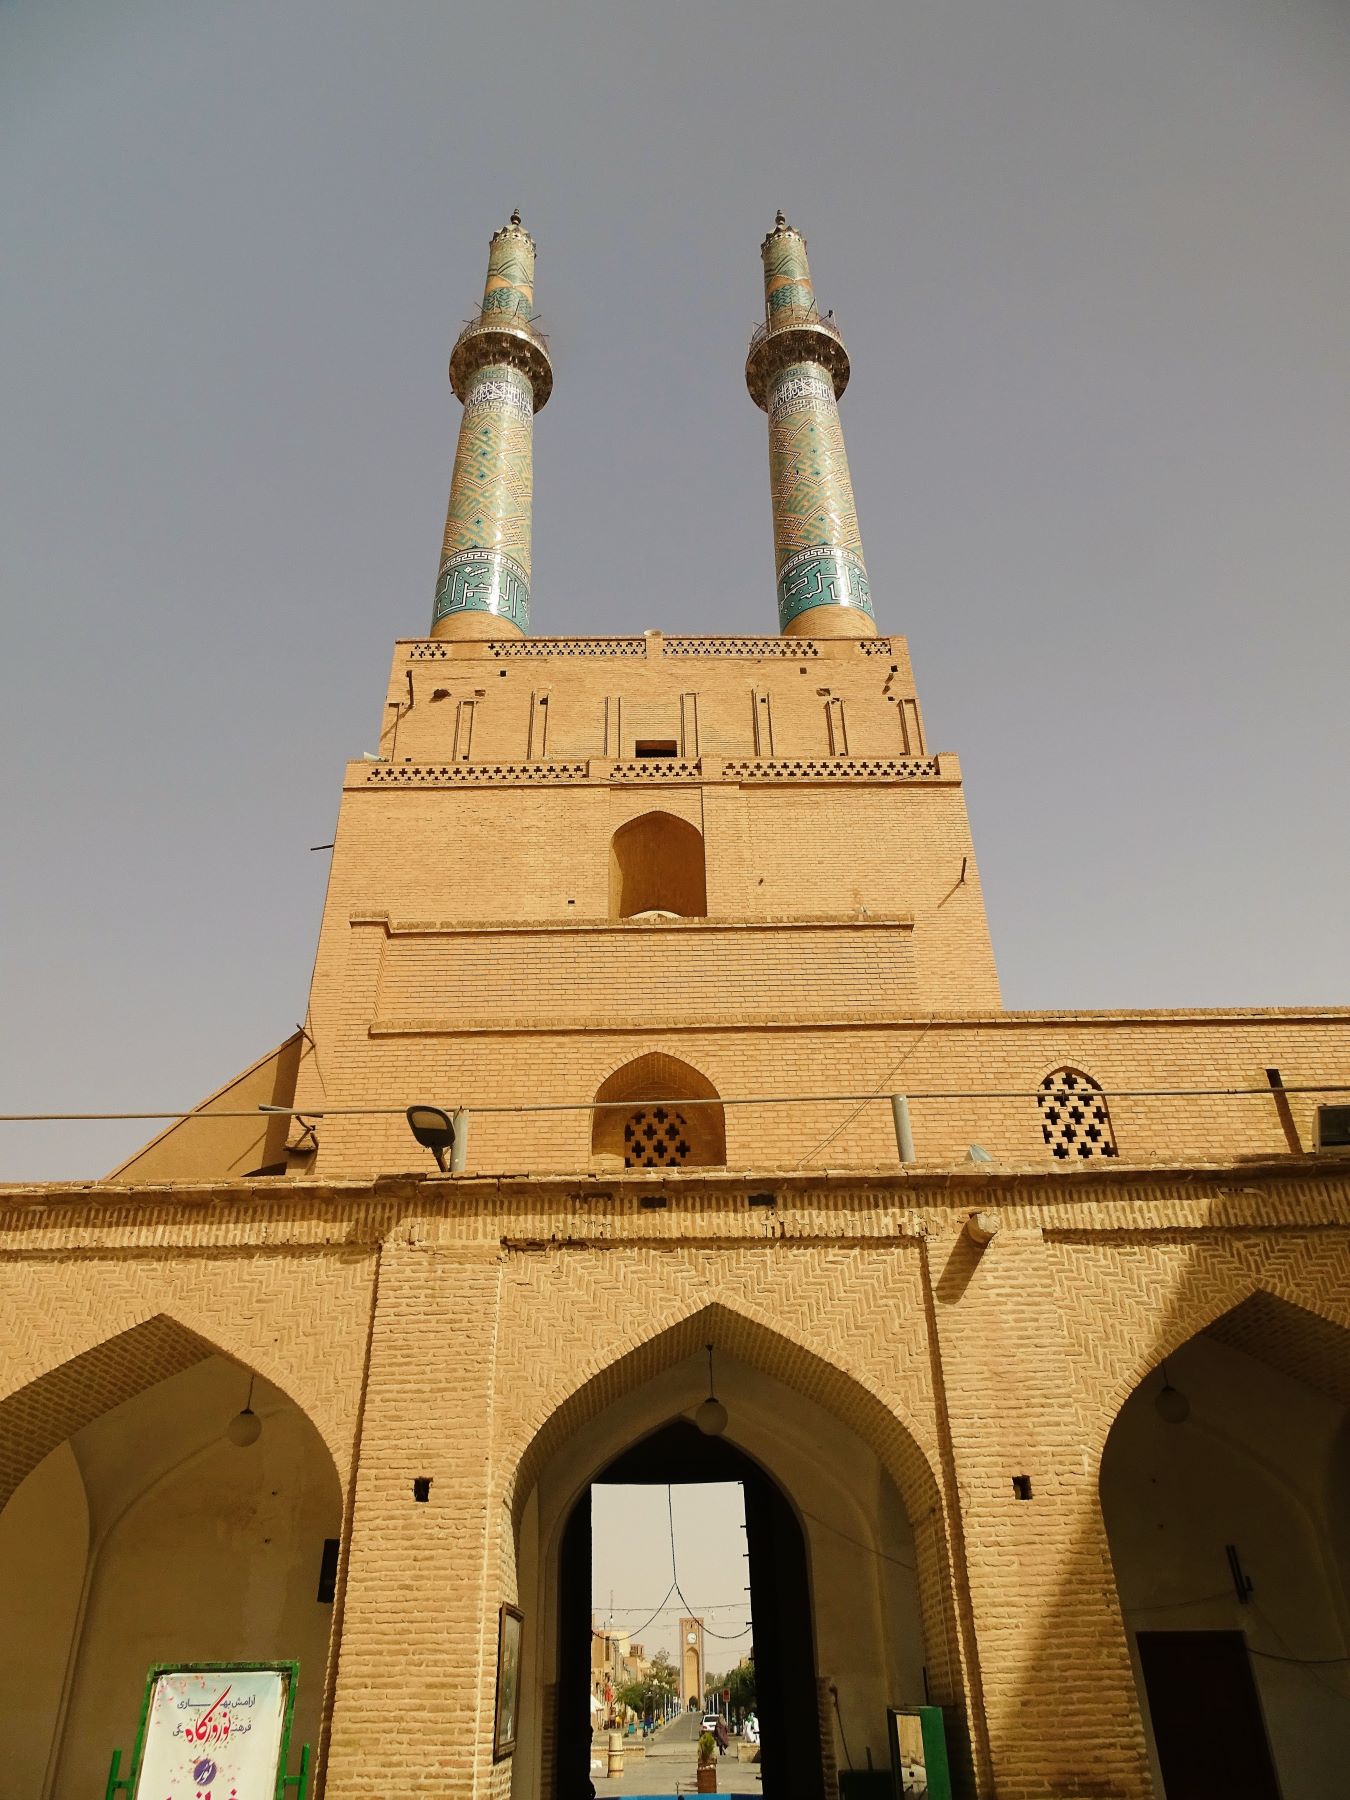 Jāmeh Mosque - Great Friday Mosque, Yazd, Iran